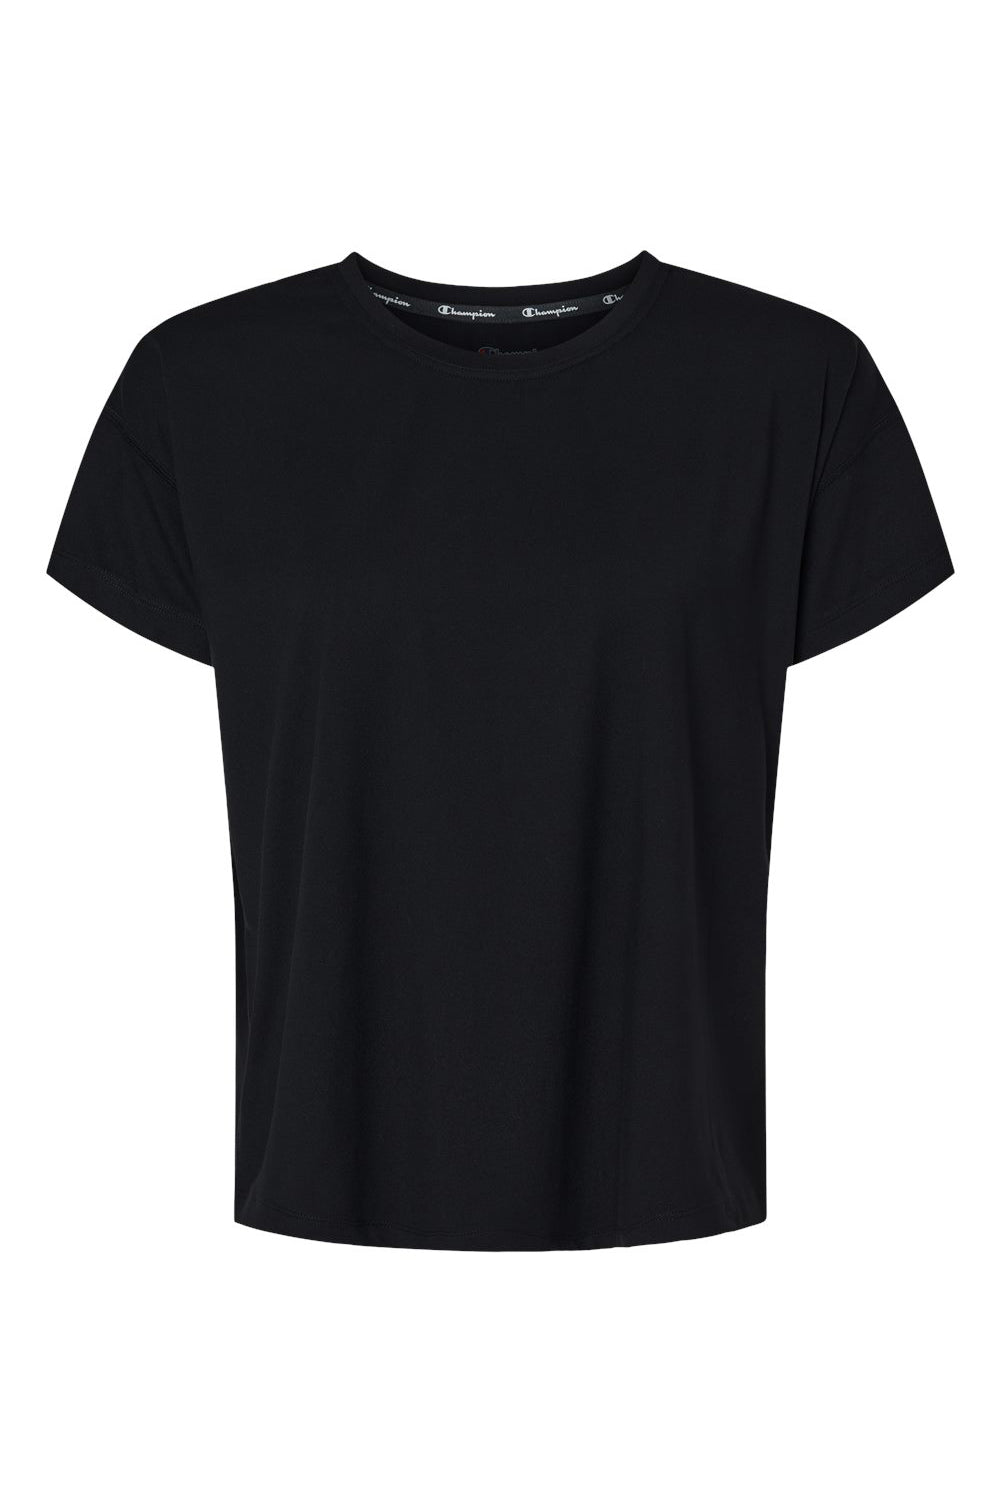 Champion CHP130 Womens Sport Soft Touch Short Sleeve Crewneck T-Shirt Black Flat Front